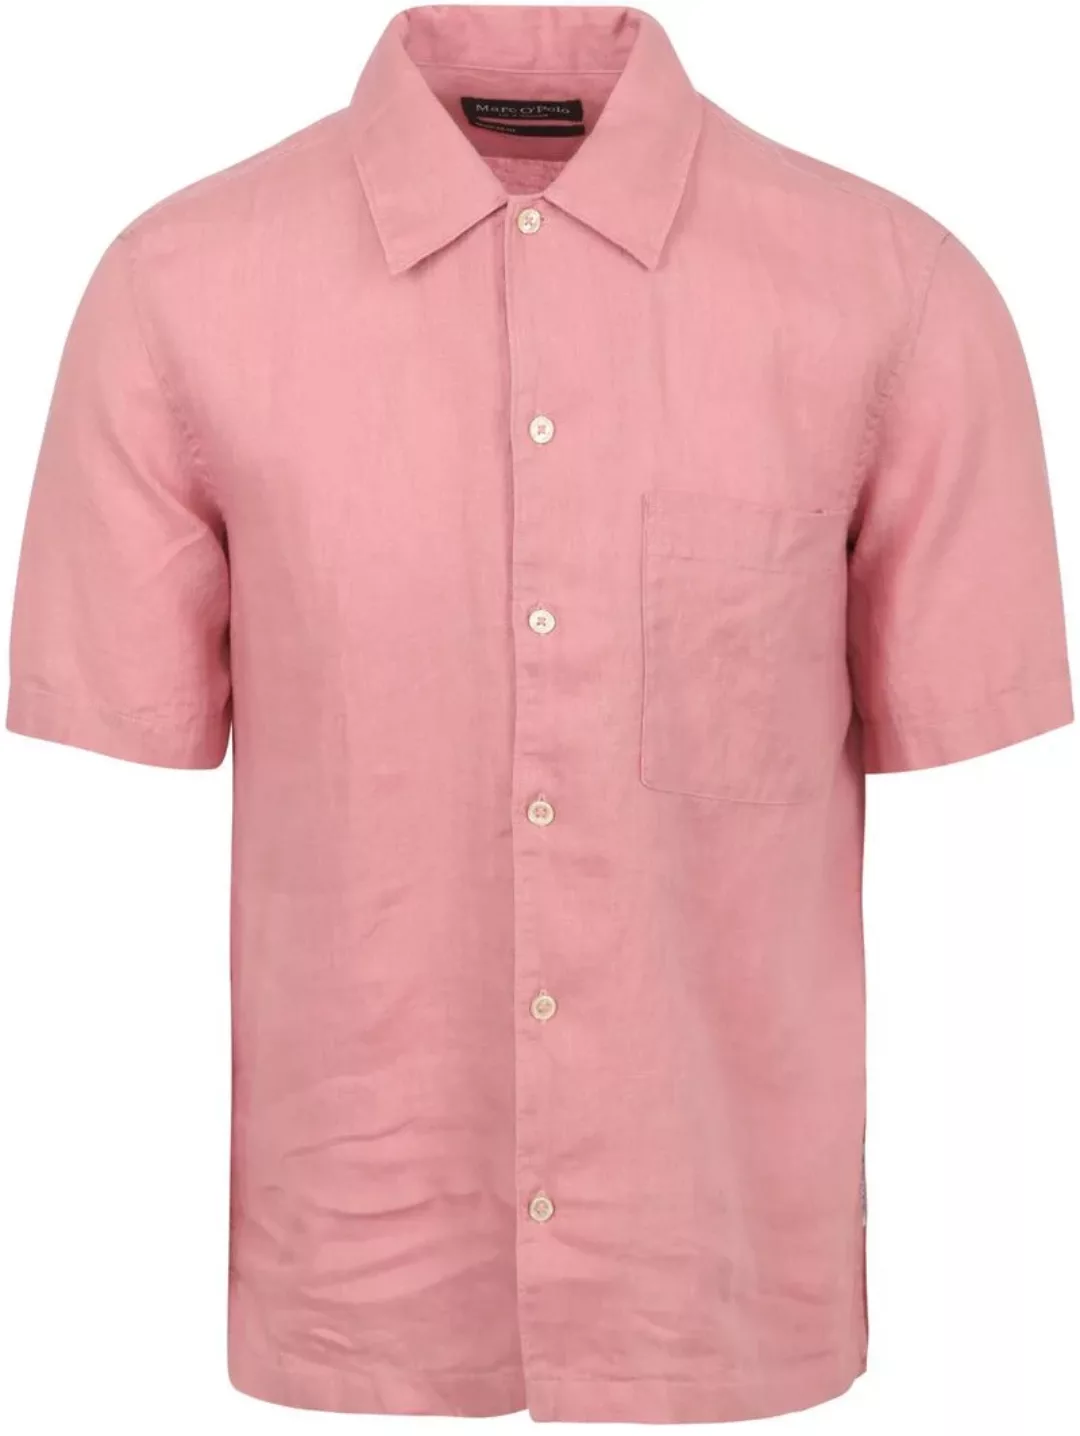 Marc O'Polo Hemd Short Sleeves Leinen Rosa - Größe L günstig online kaufen